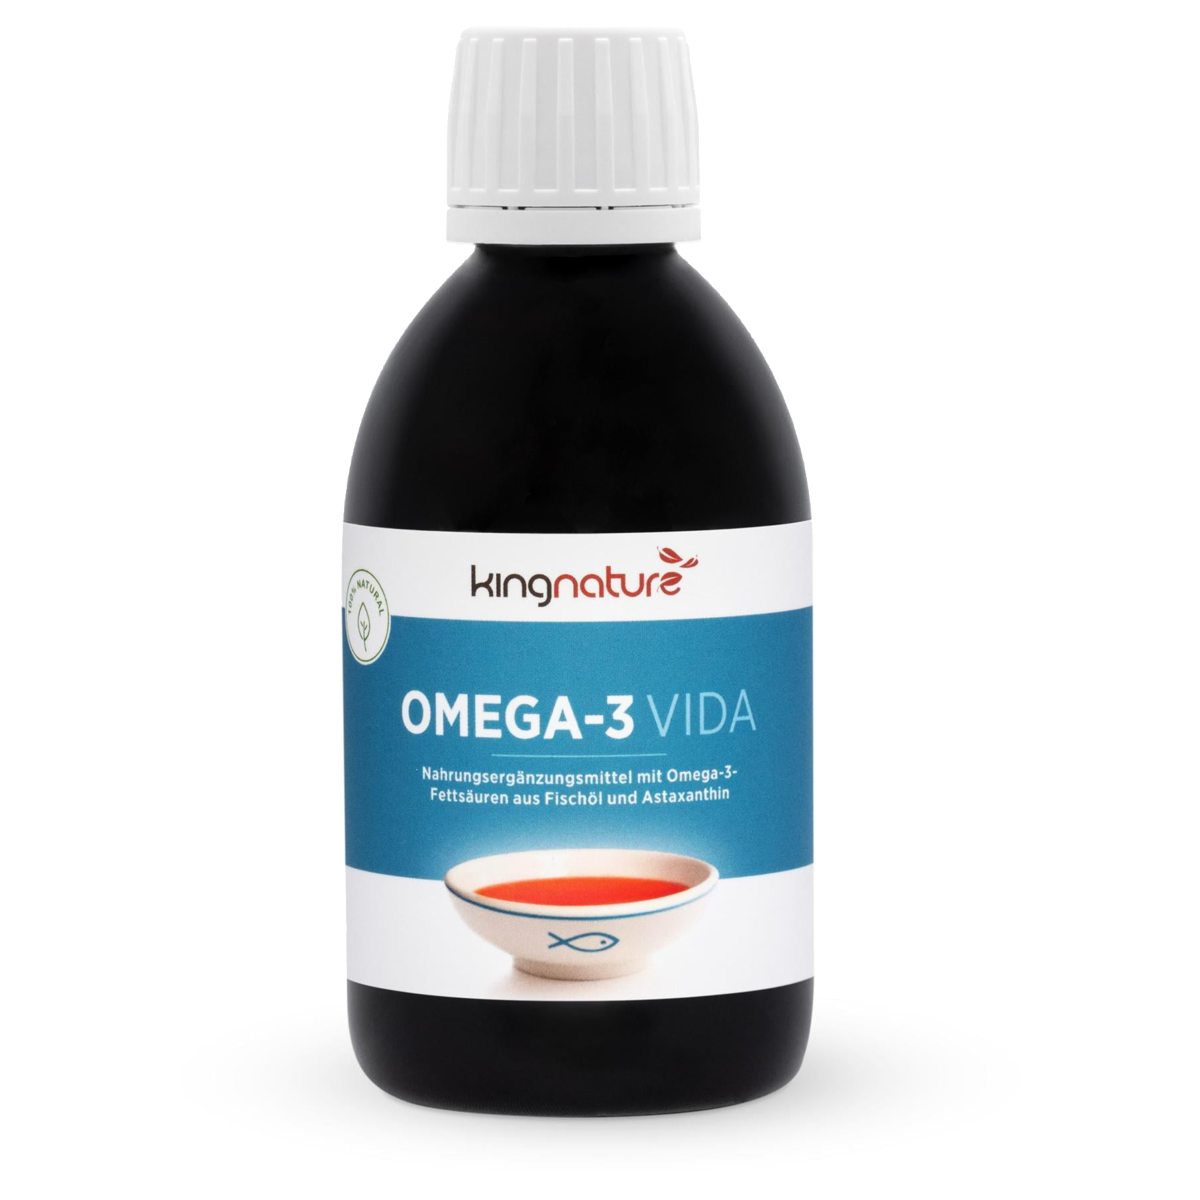 Kingnature Omega-3 Vida 250 ml